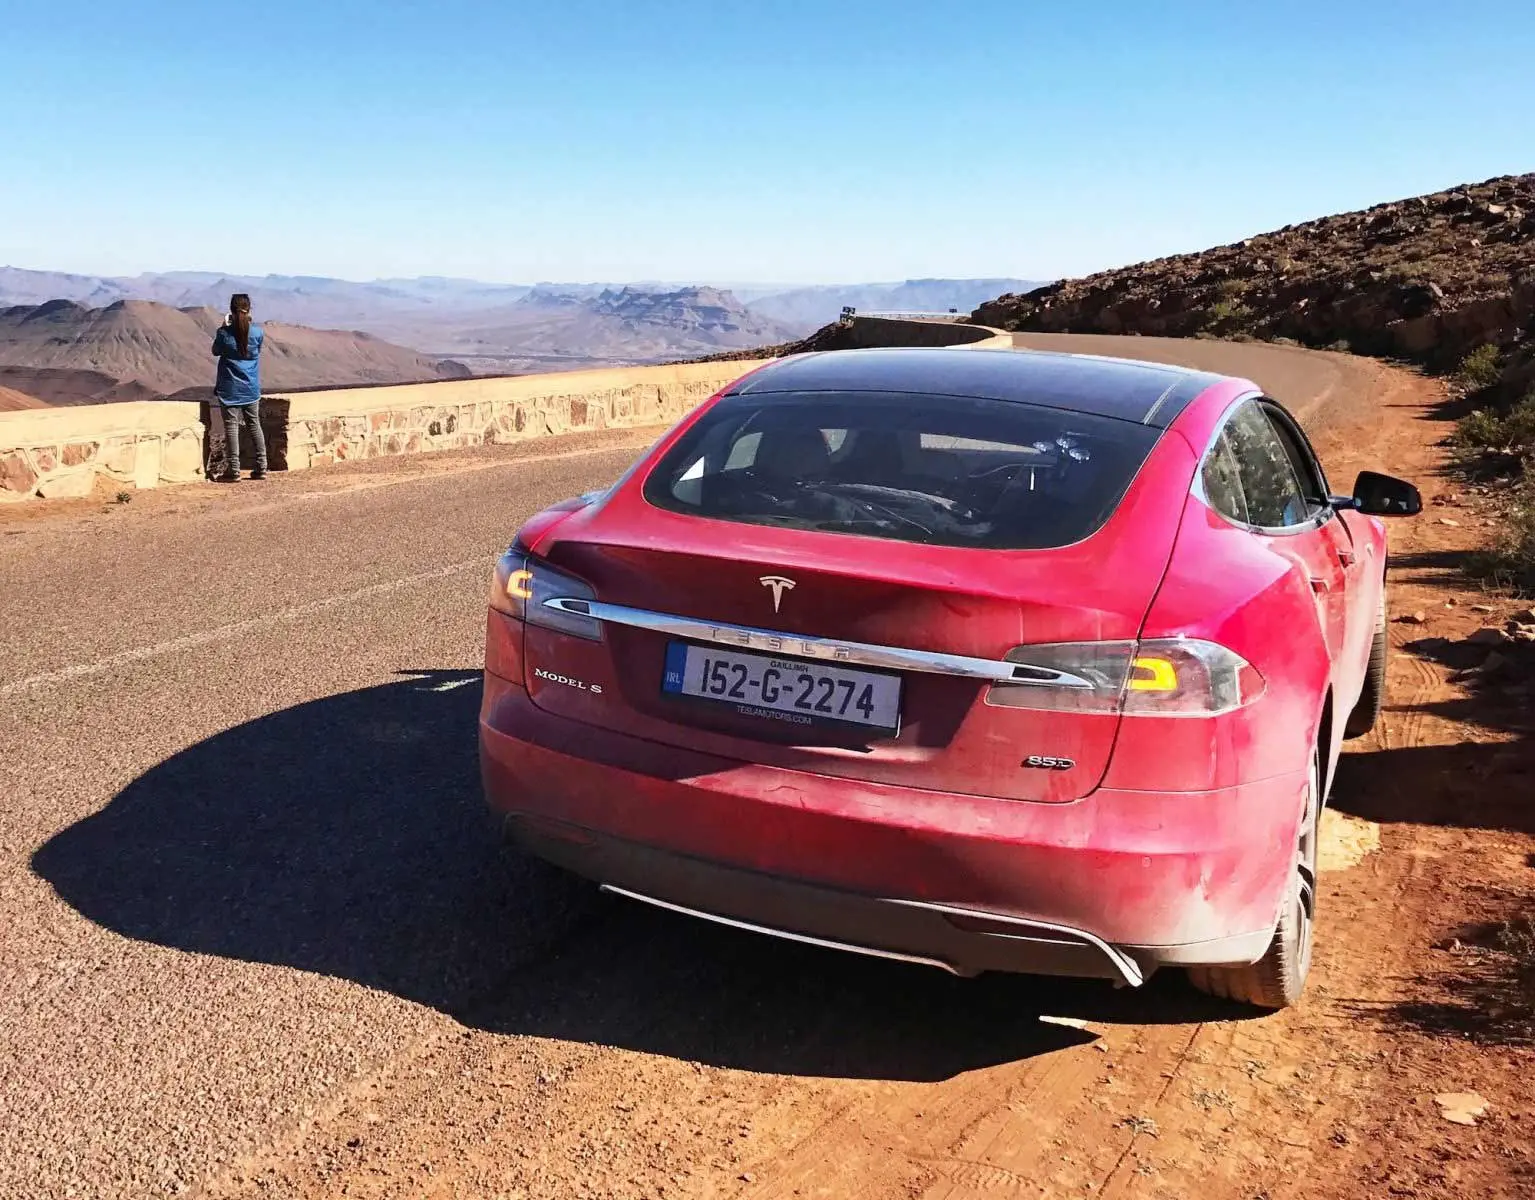 Morocco Sightseeing, Visite Morocco, Travelled to Ouarzazate in Morocco (via Edinburgh) in Tesla